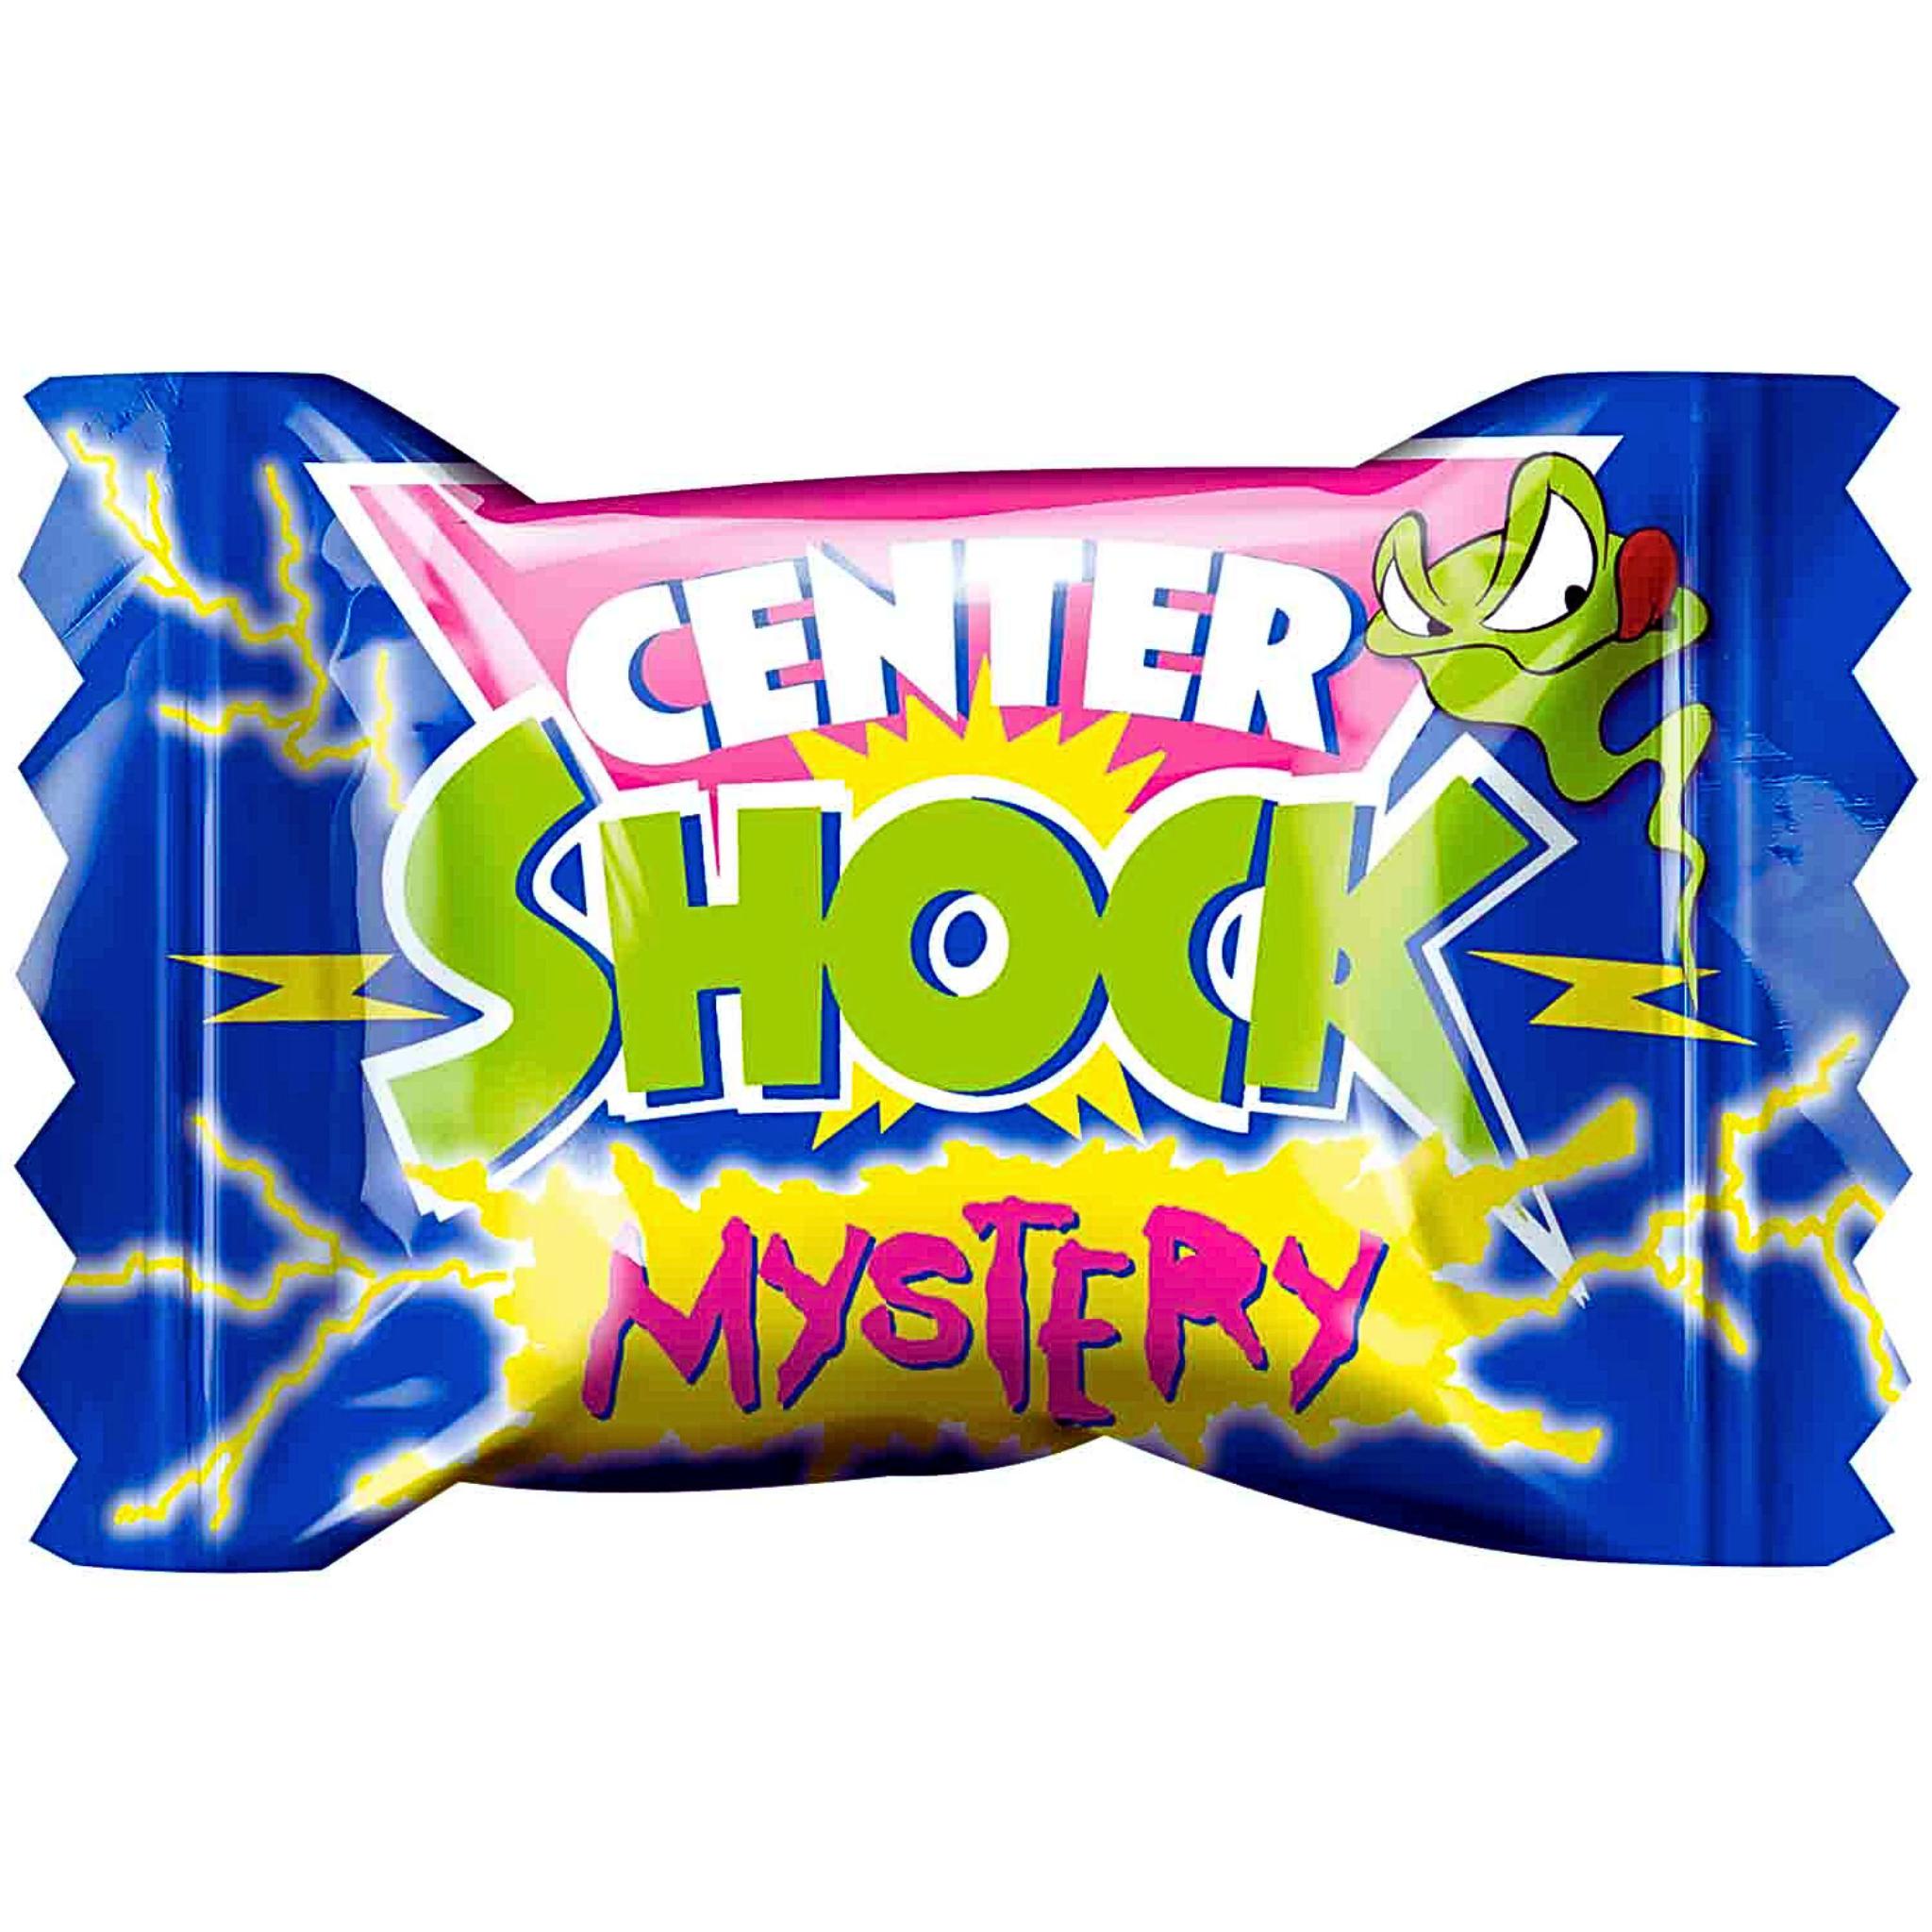 Center Shock Mystery - 4g